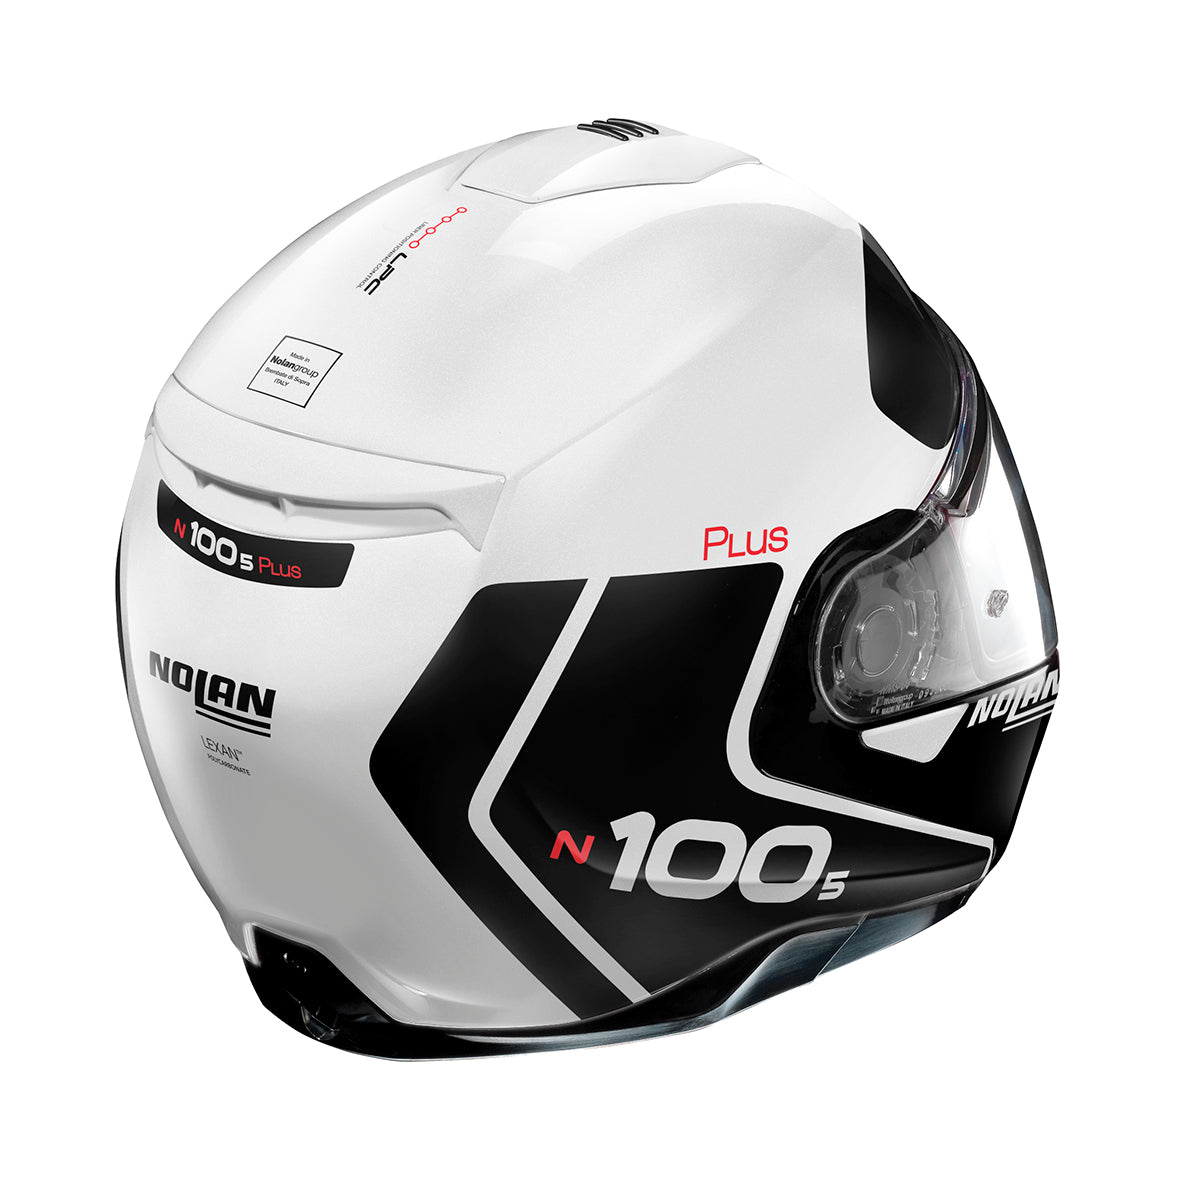 Nolan N100-5 Plus Distinctive 22 Metal White Helmet